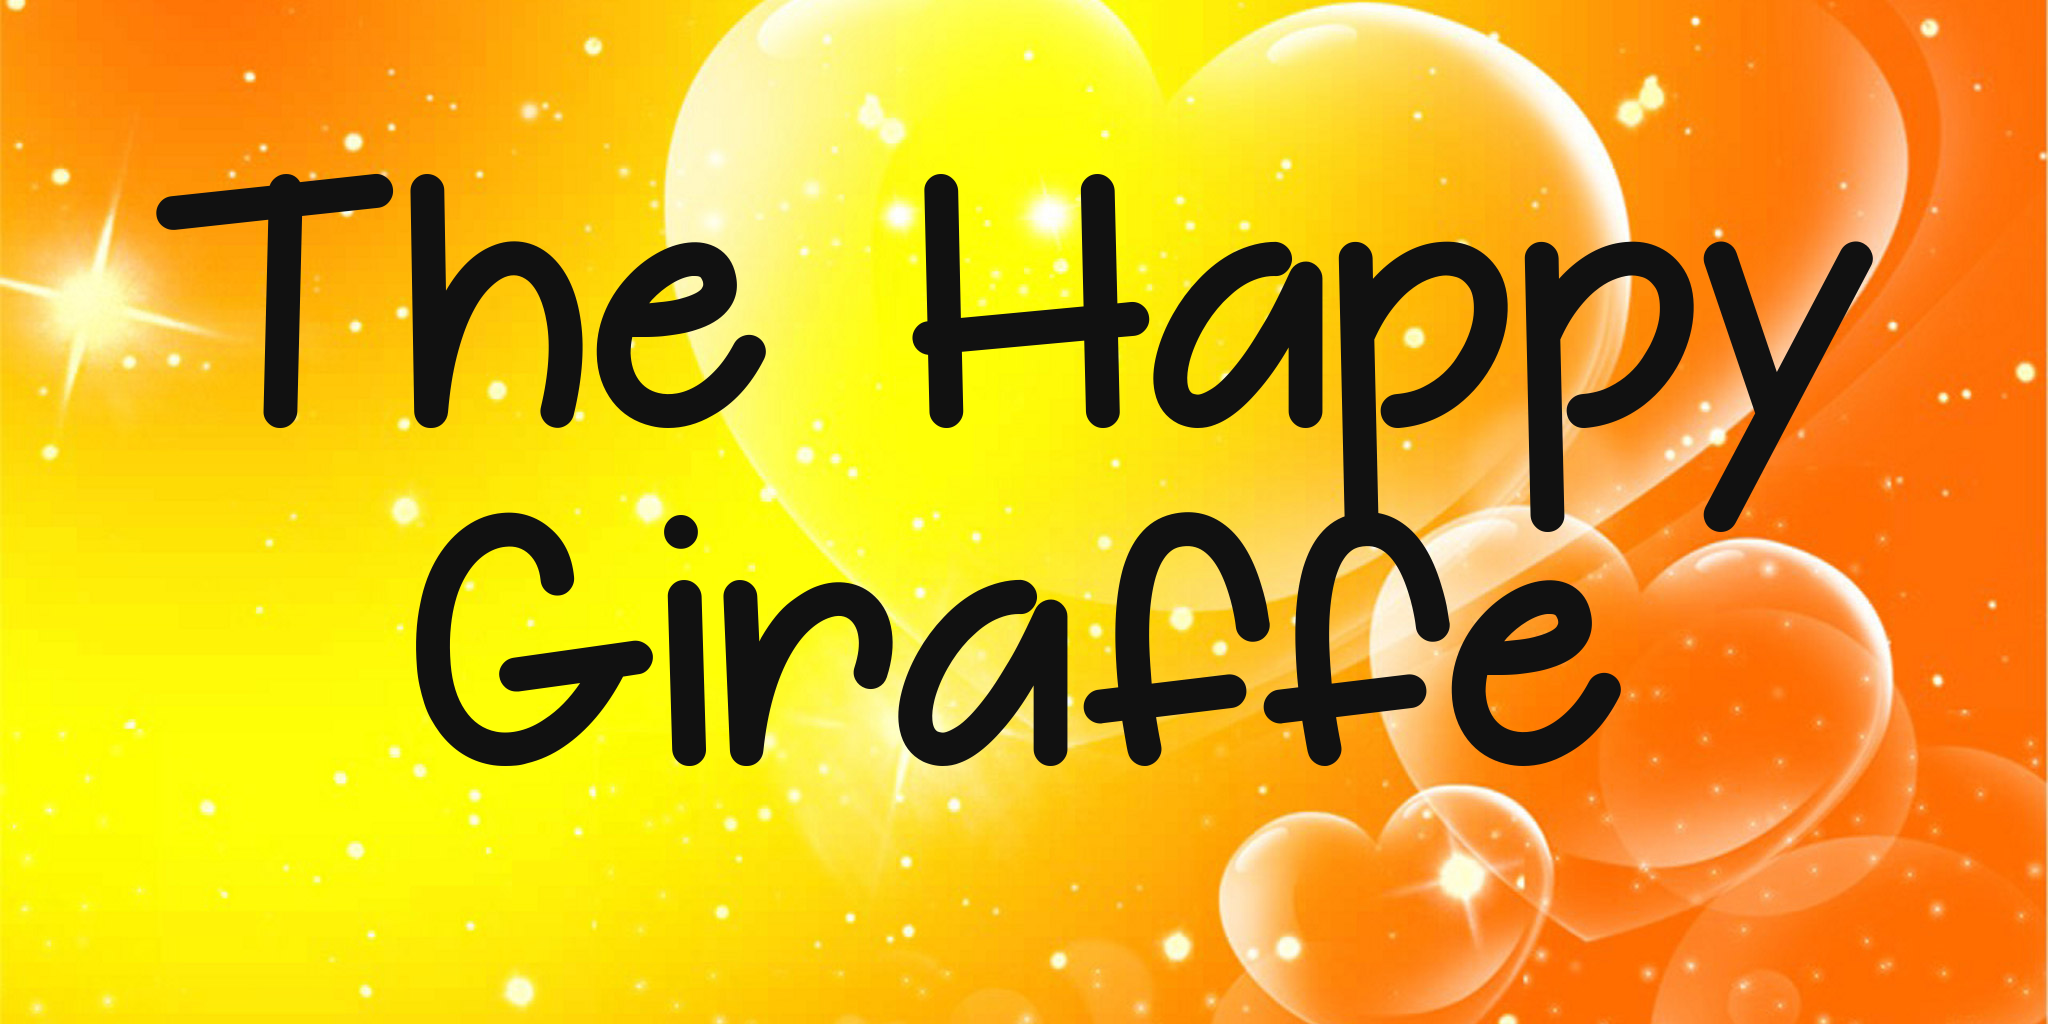 The Happy Giraffe